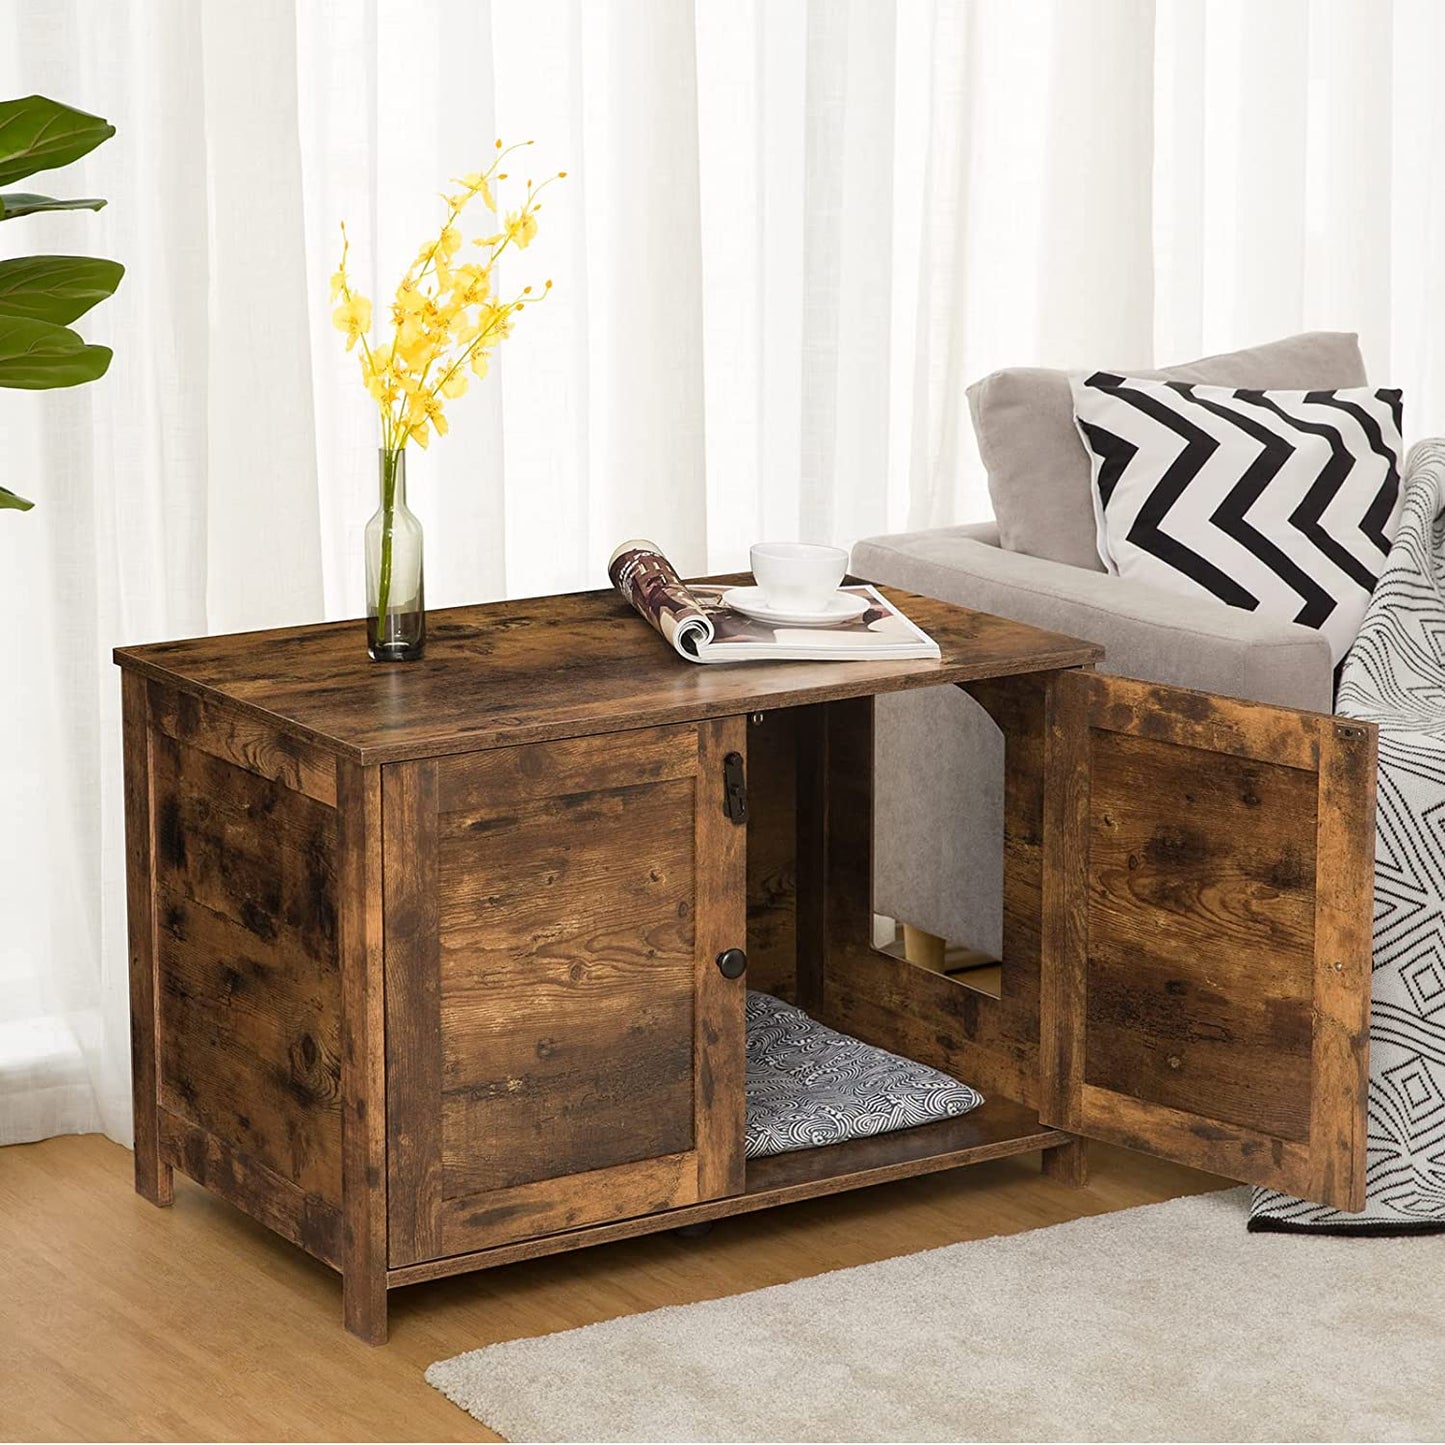 Cat Litter Box Furniture - Wooden Pet House for Living Room